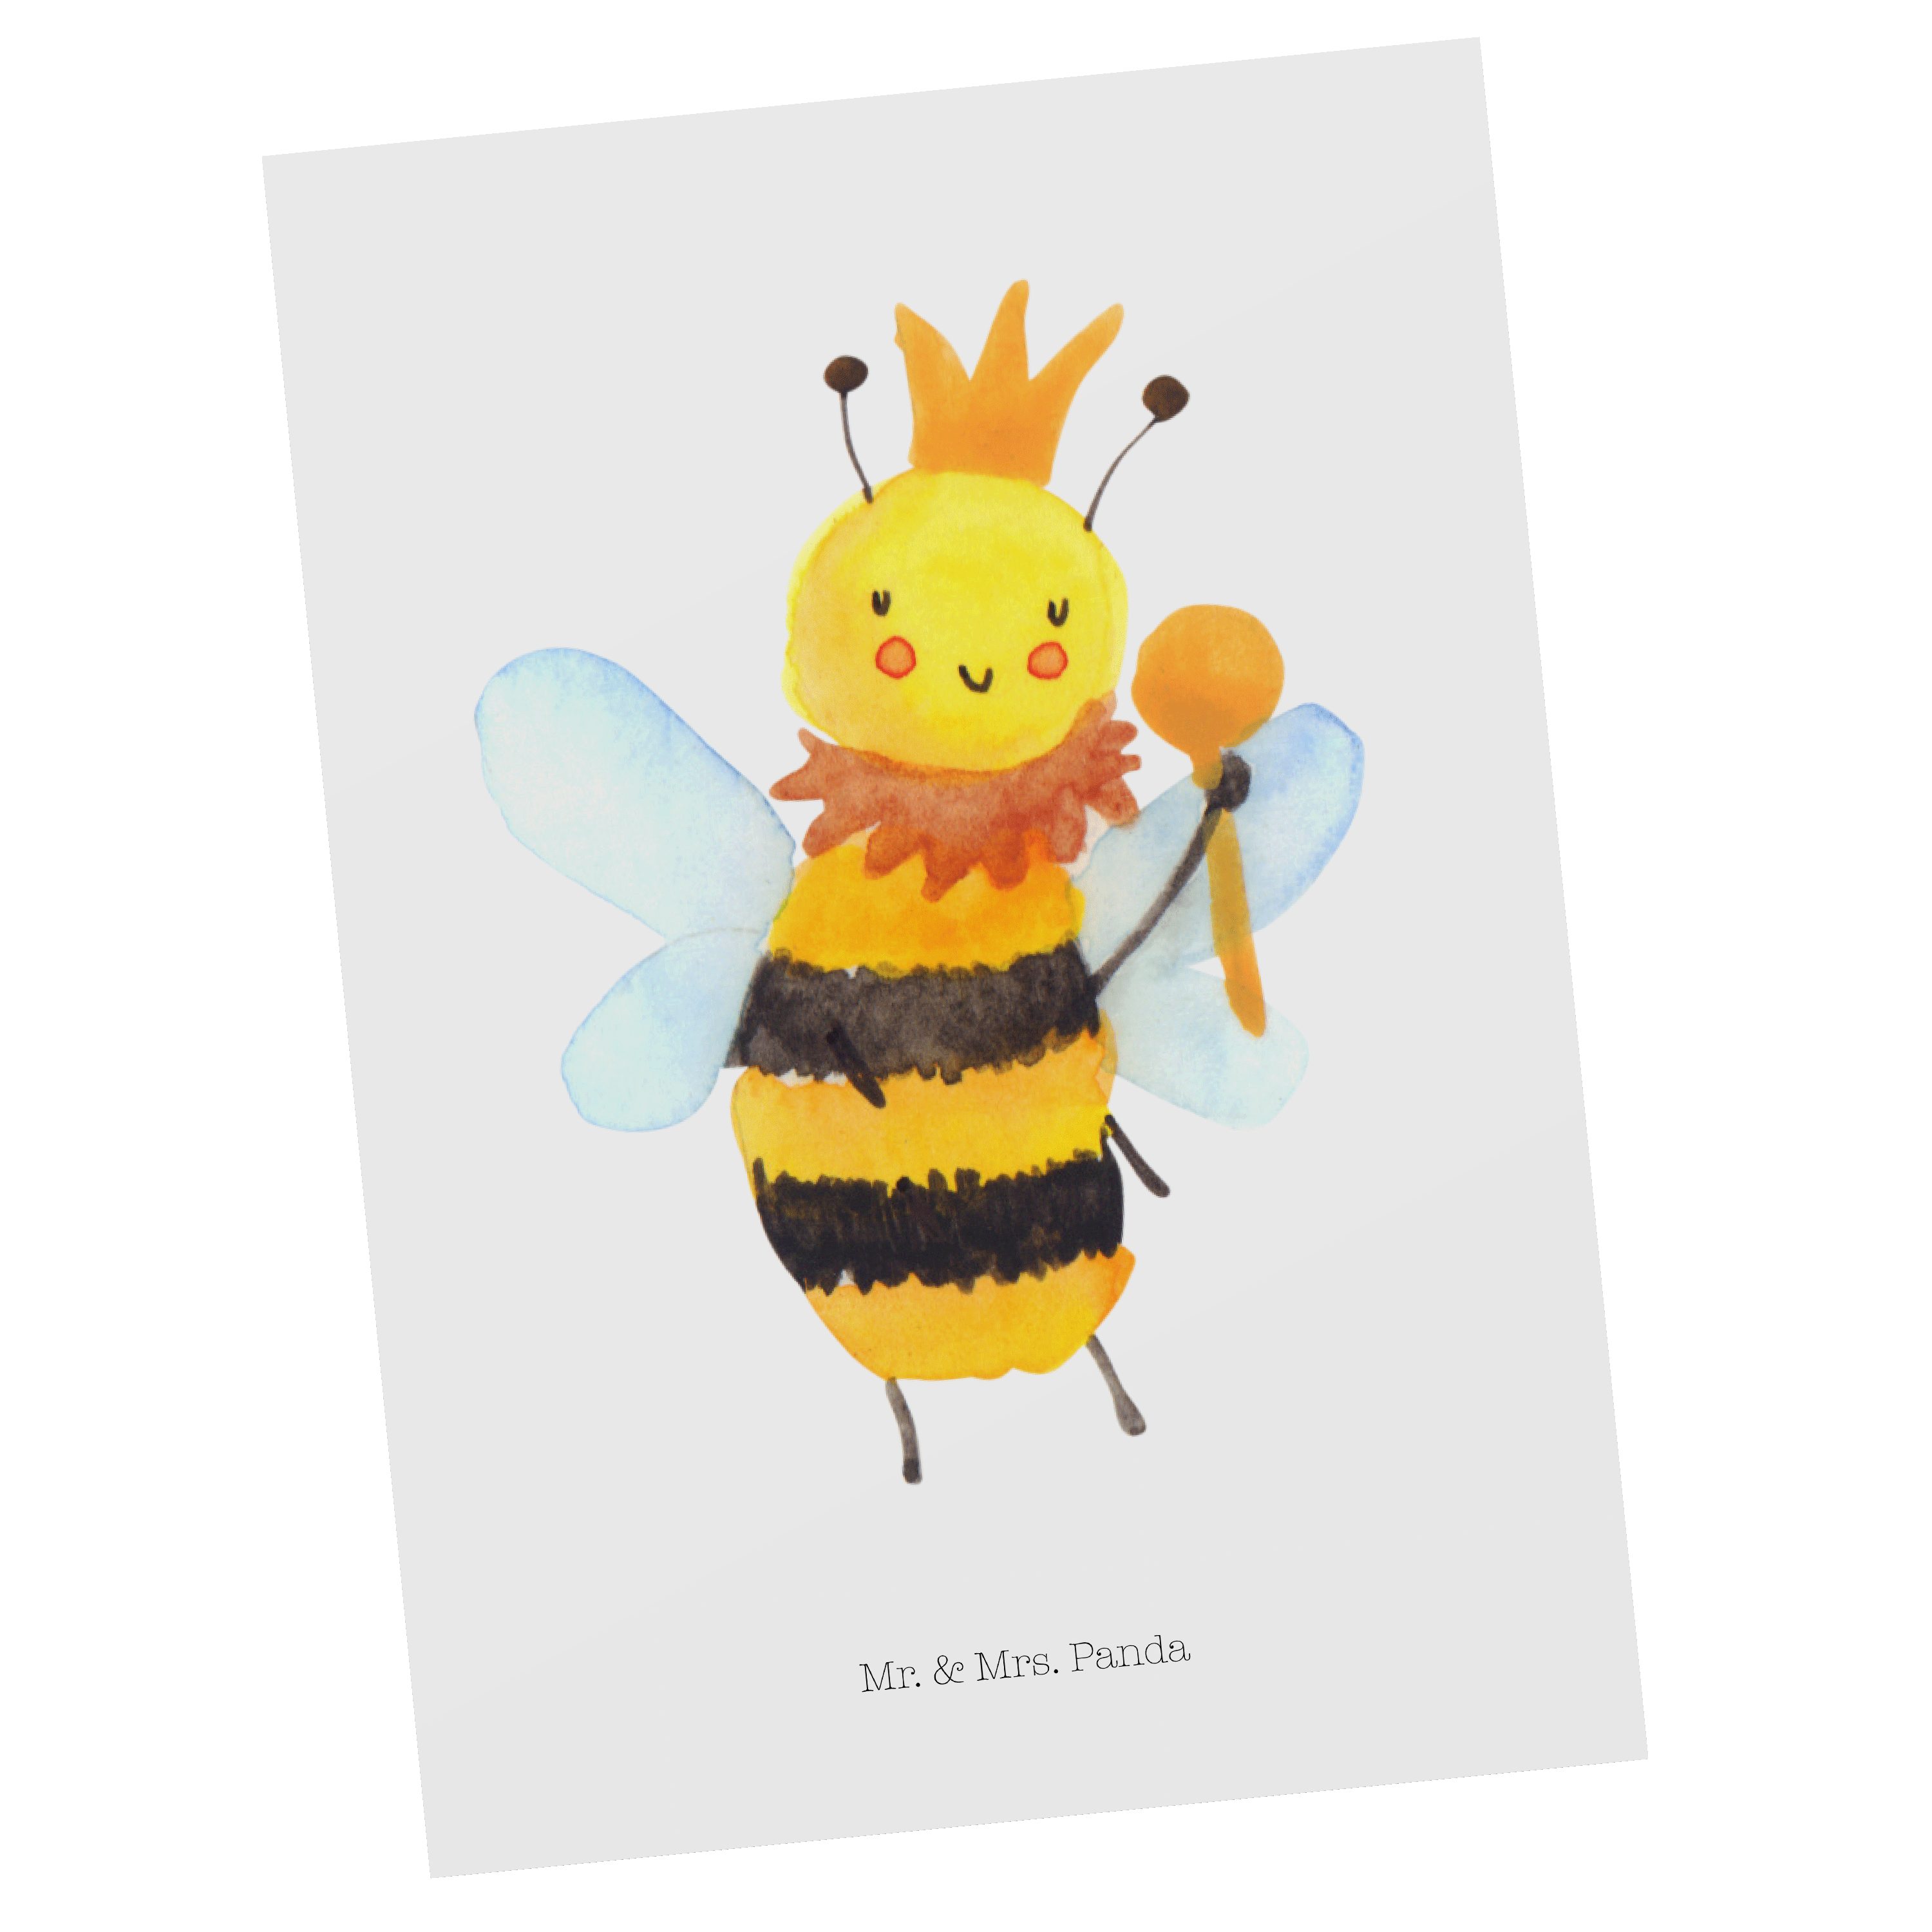 Mr. & Mrs. Panda Postkarte Biene König - Weiß - Geschenk, Karte, Wespe, Grußkarte, Einladungskar